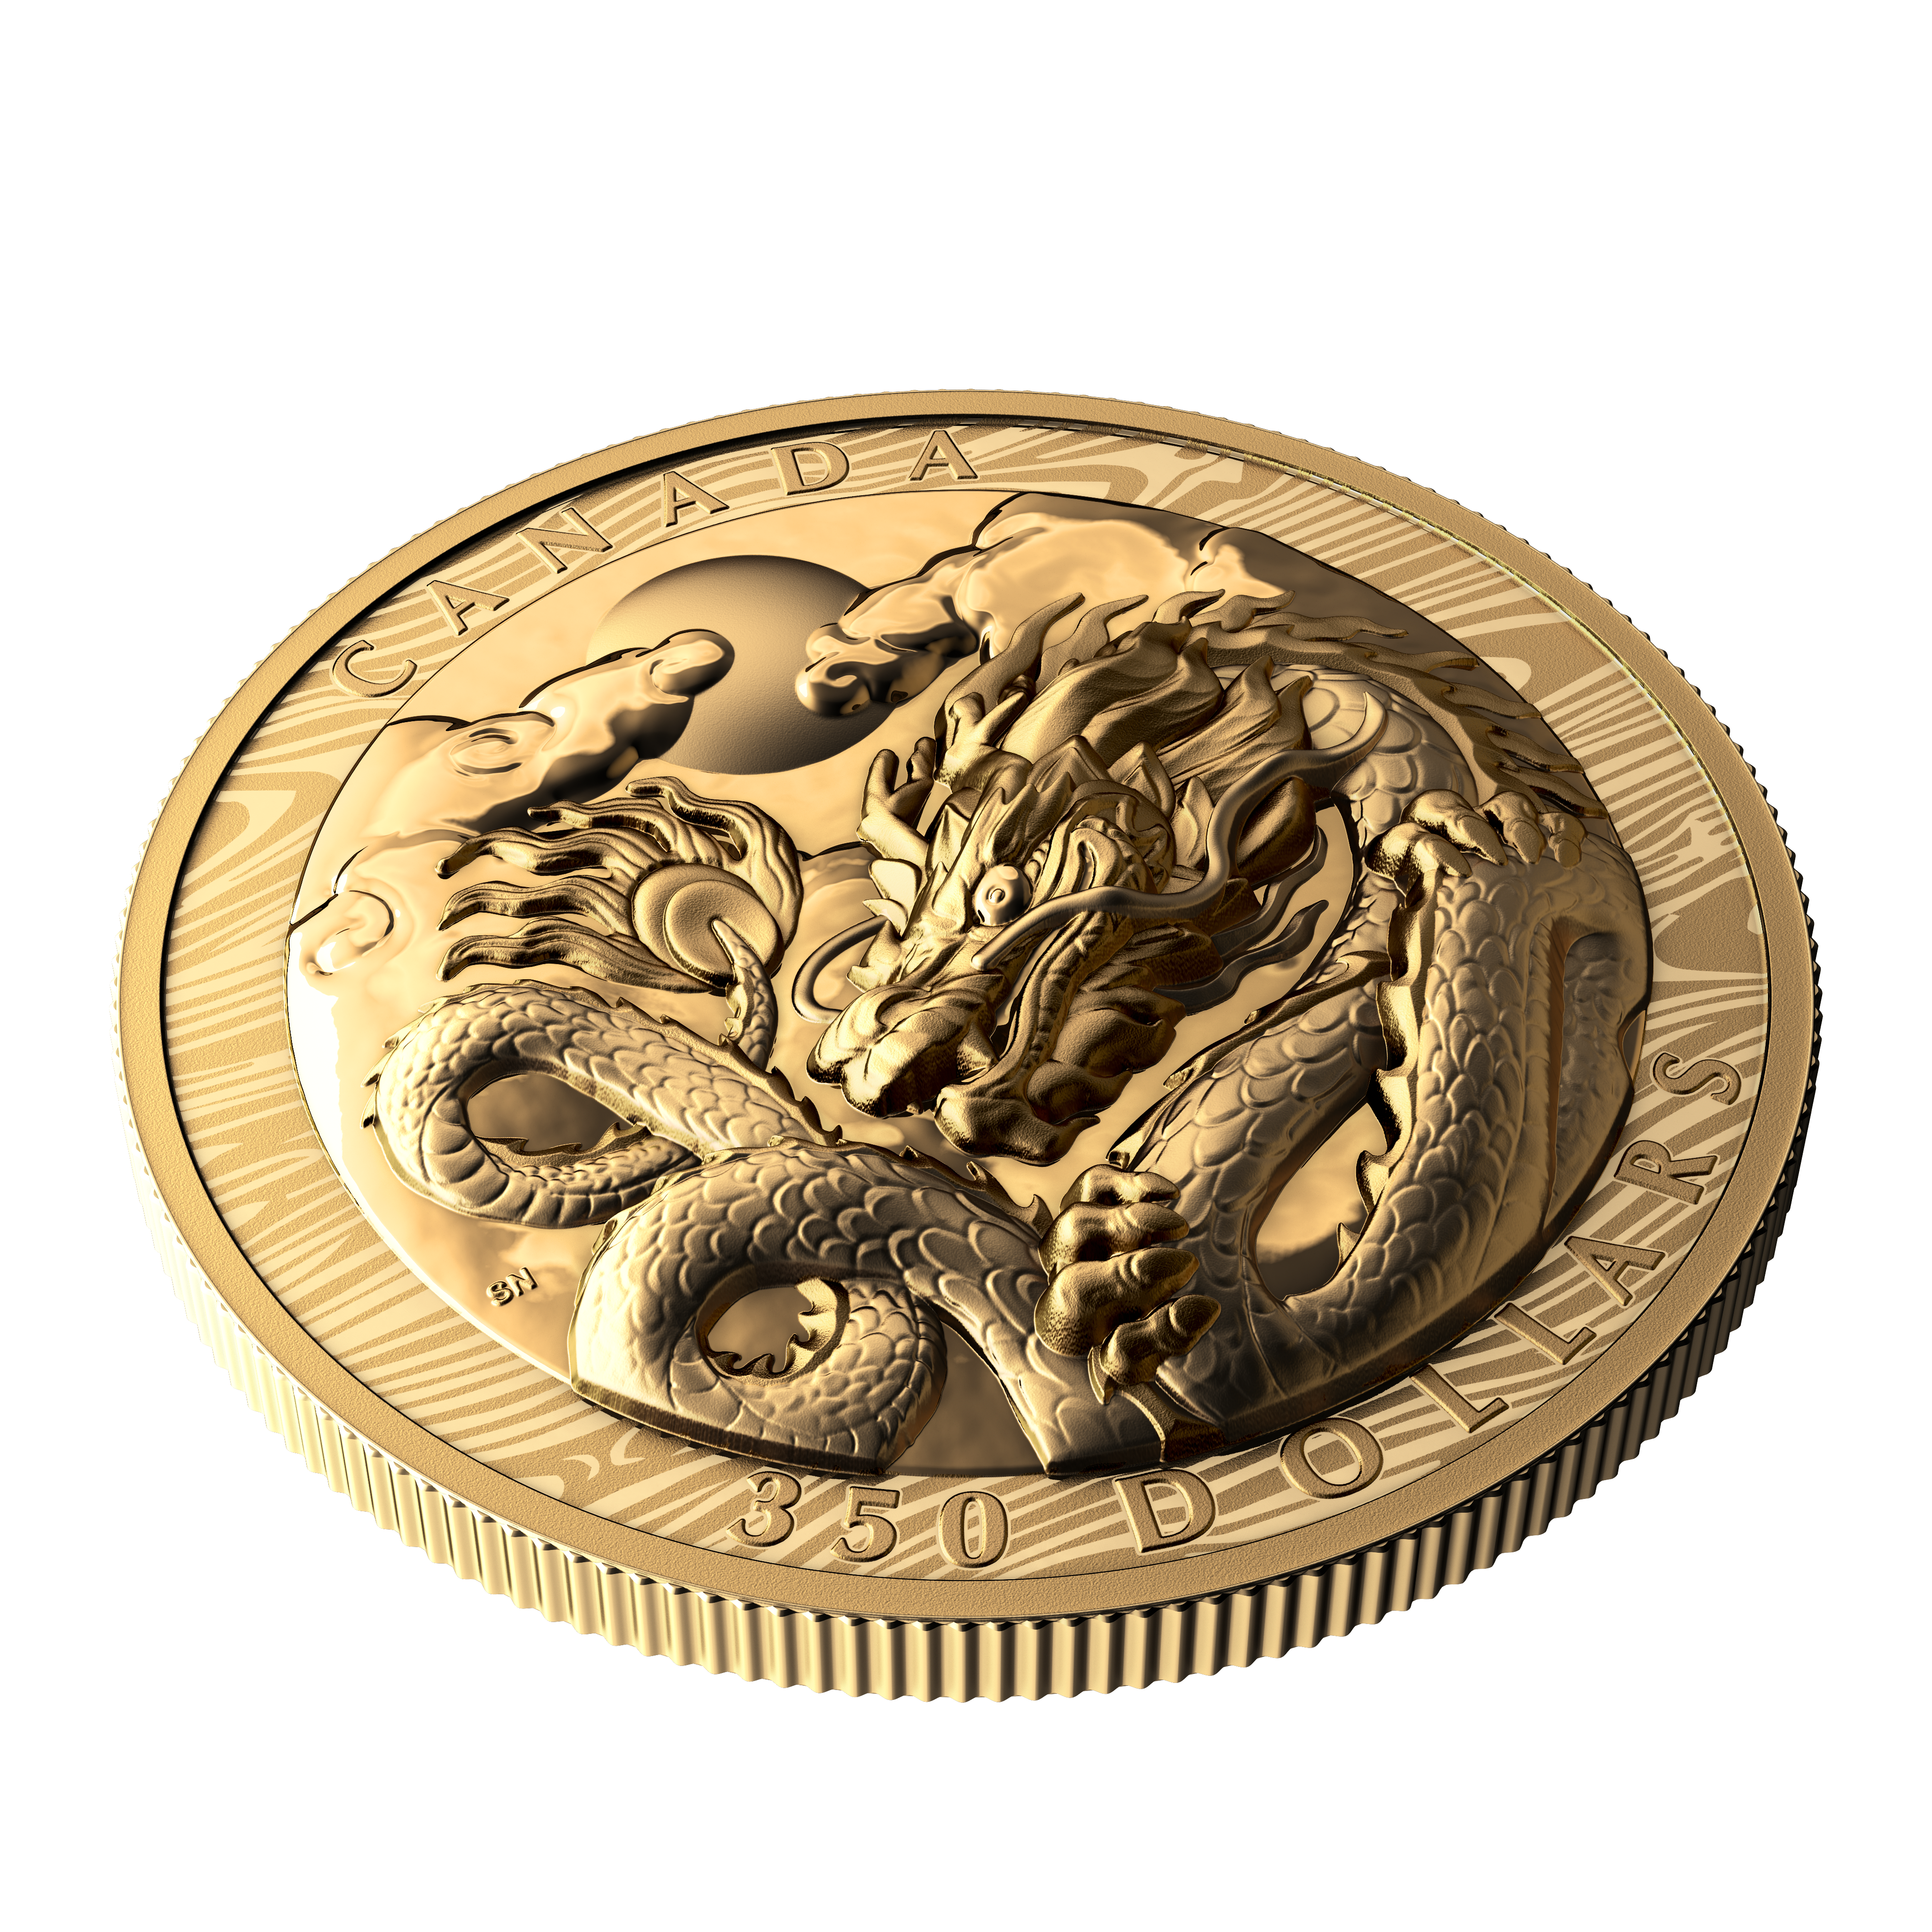 DRAGON Lunar Year Gold Coin $350 Canada 2024